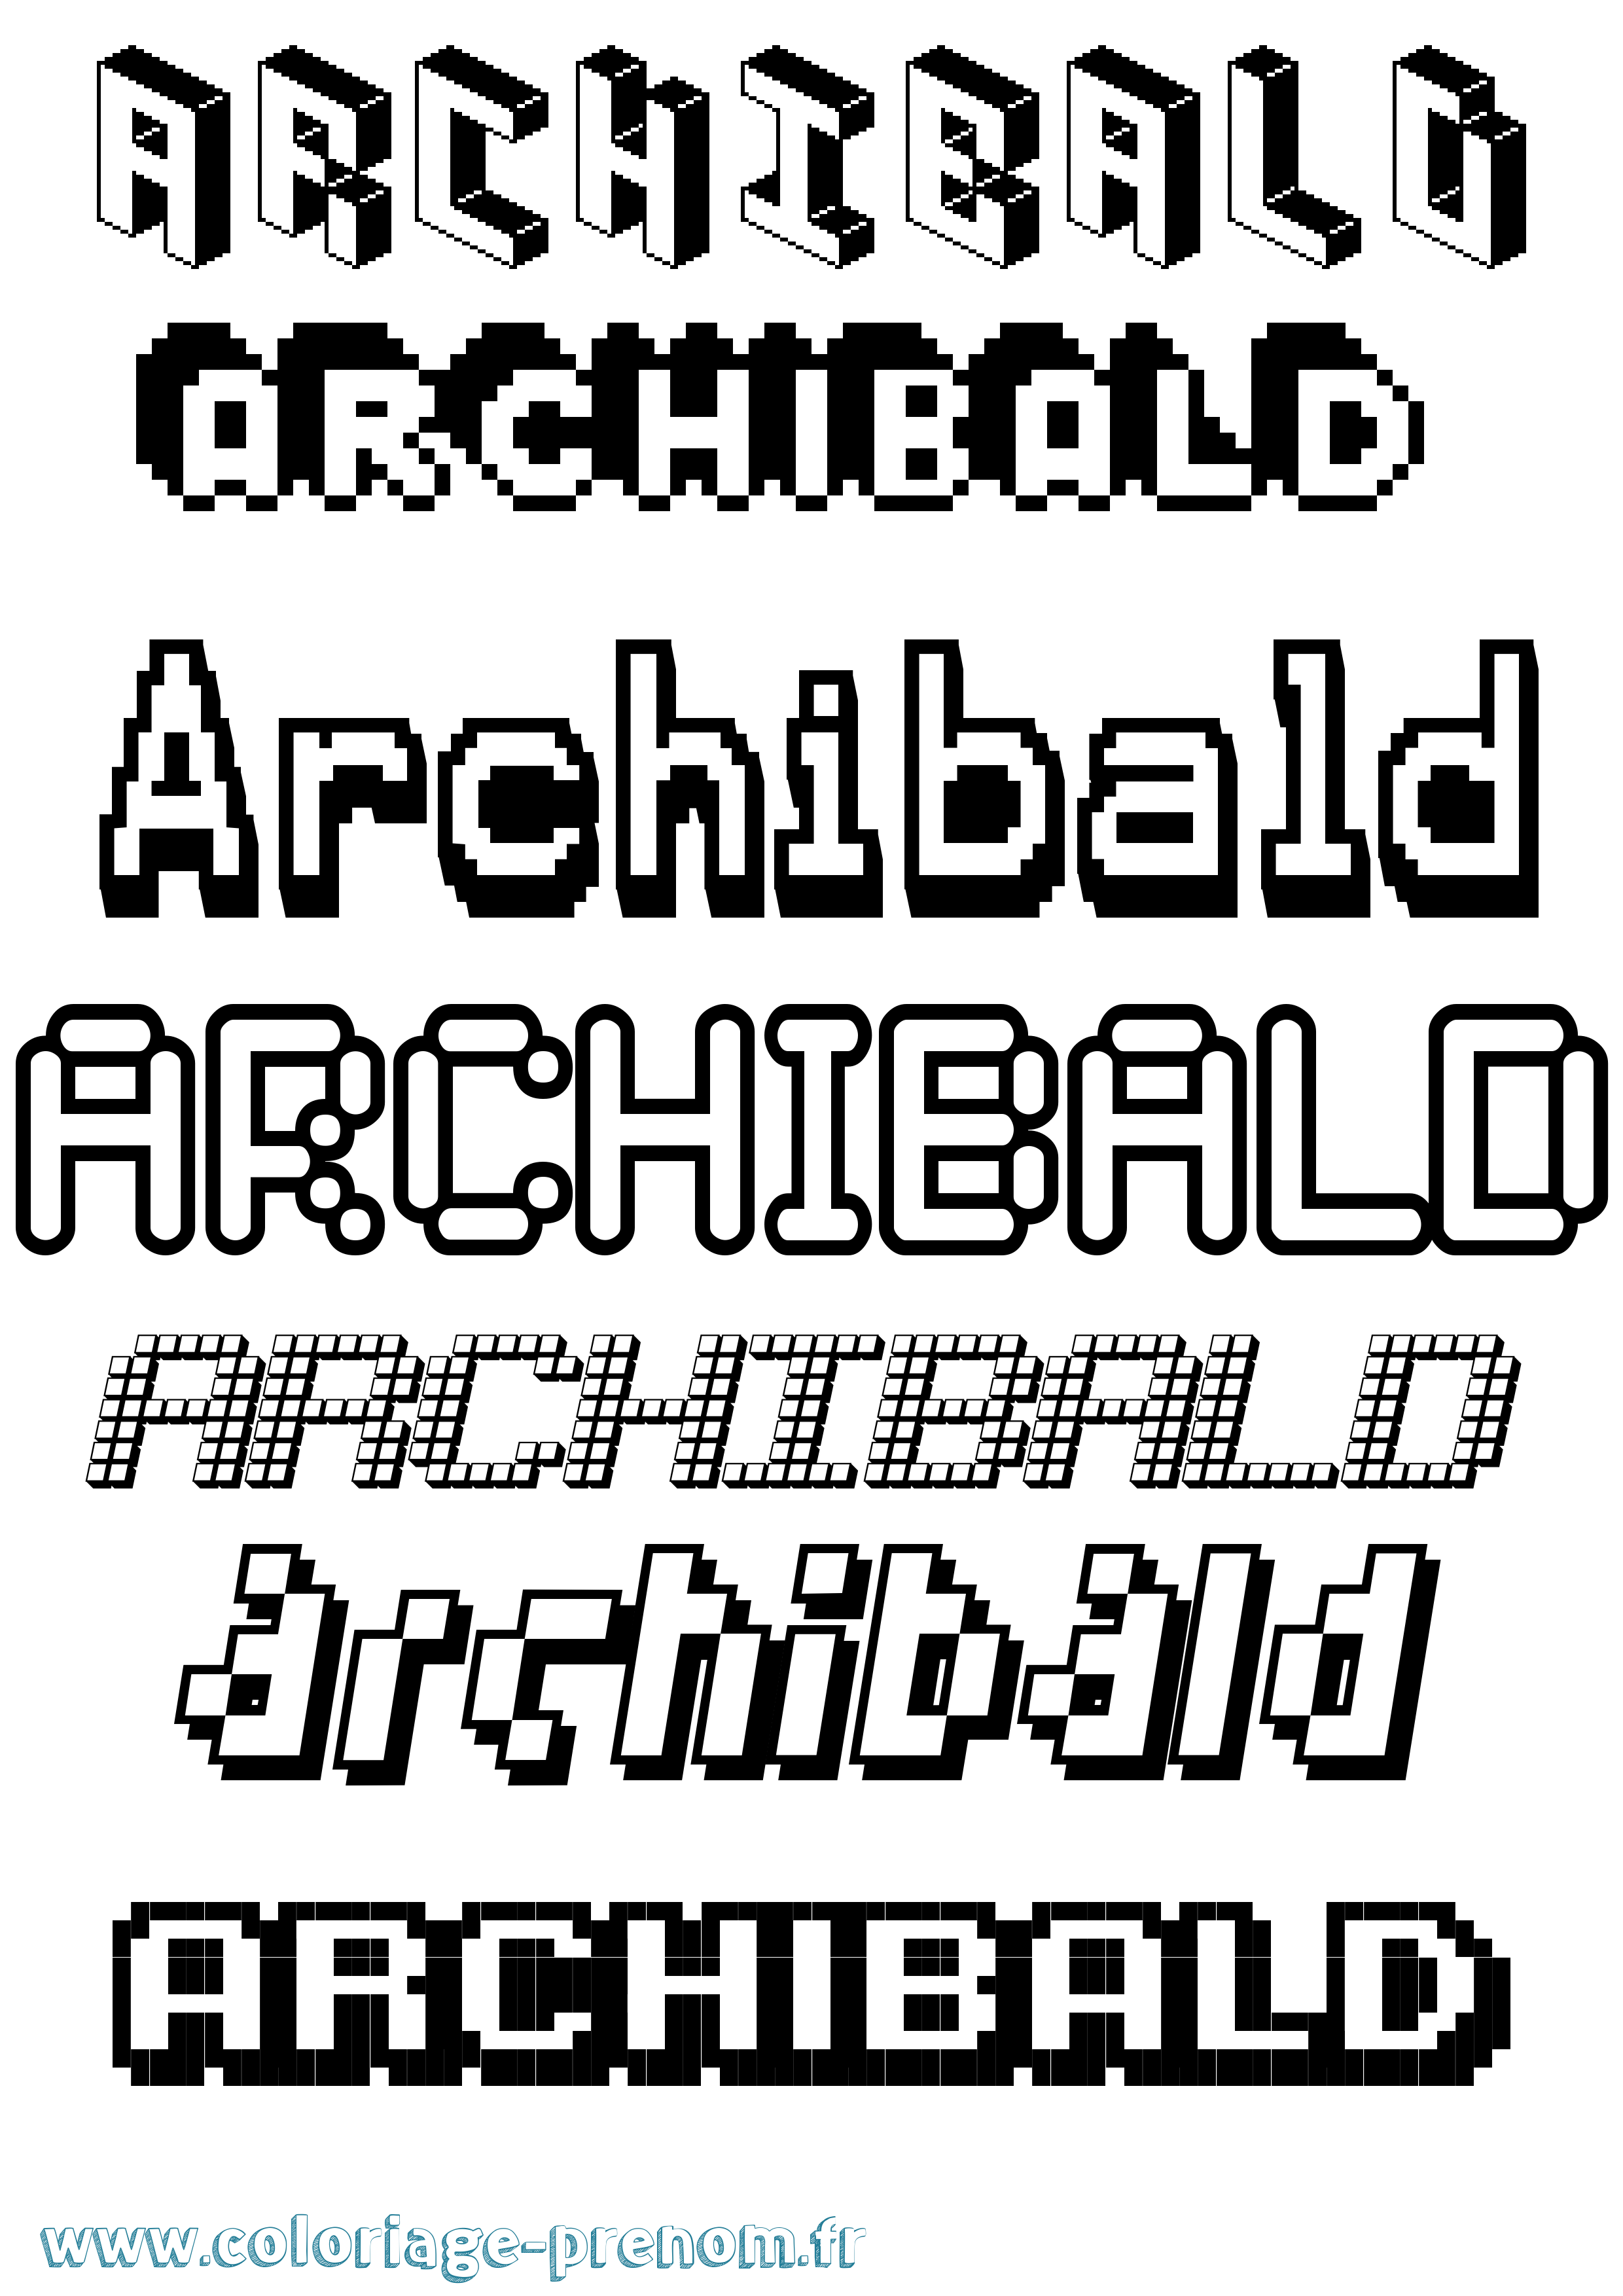 Coloriage prénom Archibald Pixel